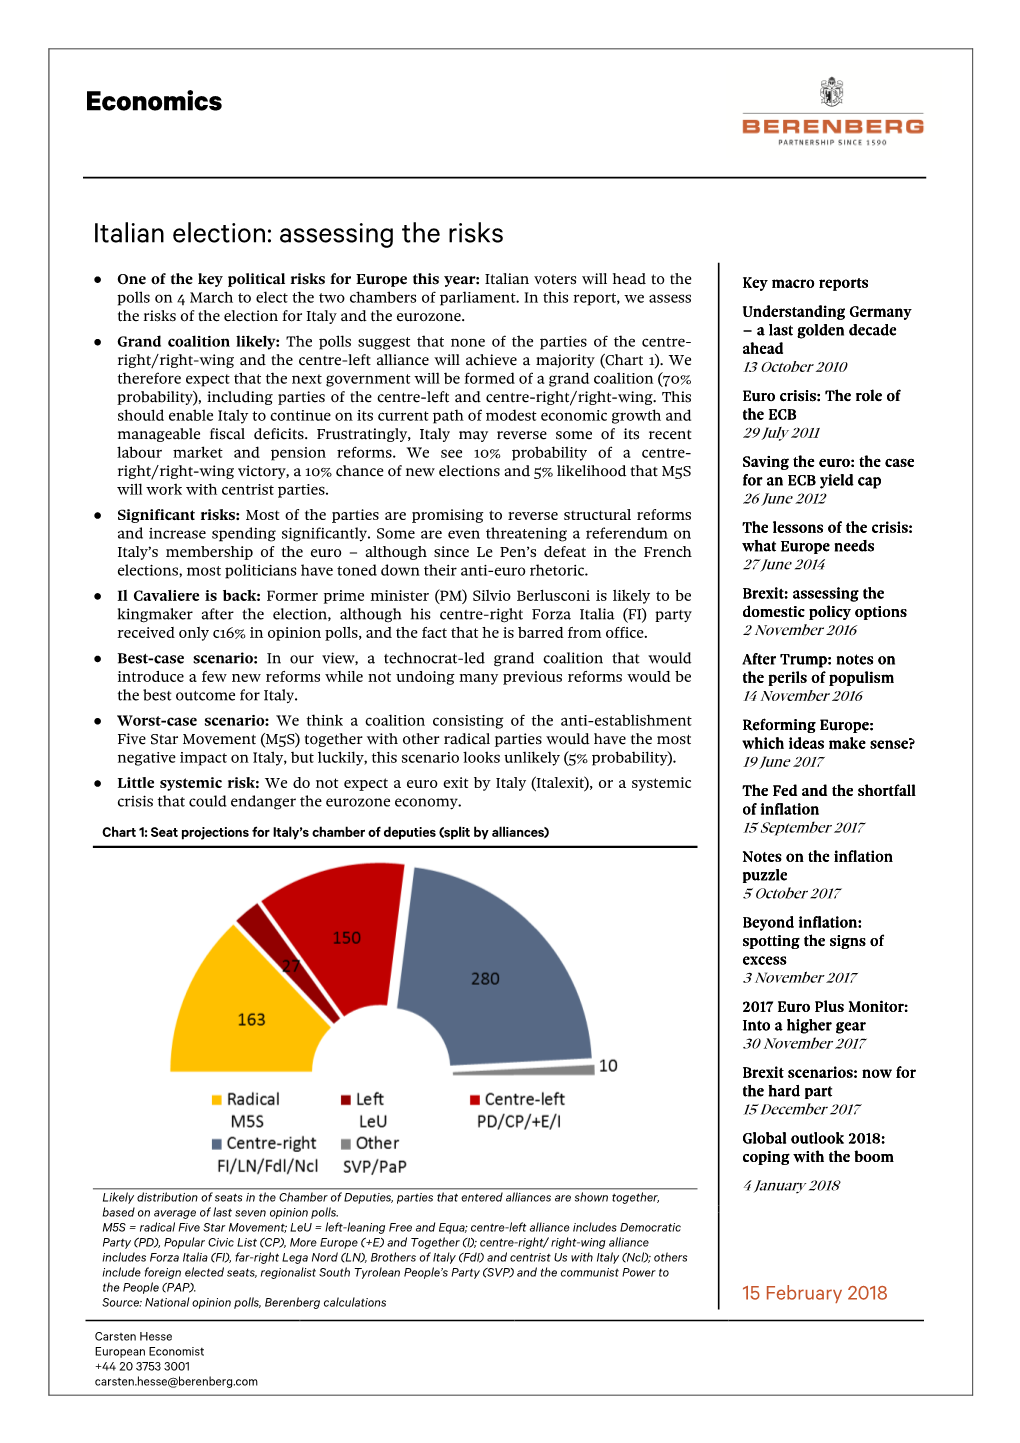 Economics Italian Election: Assessing the Risks